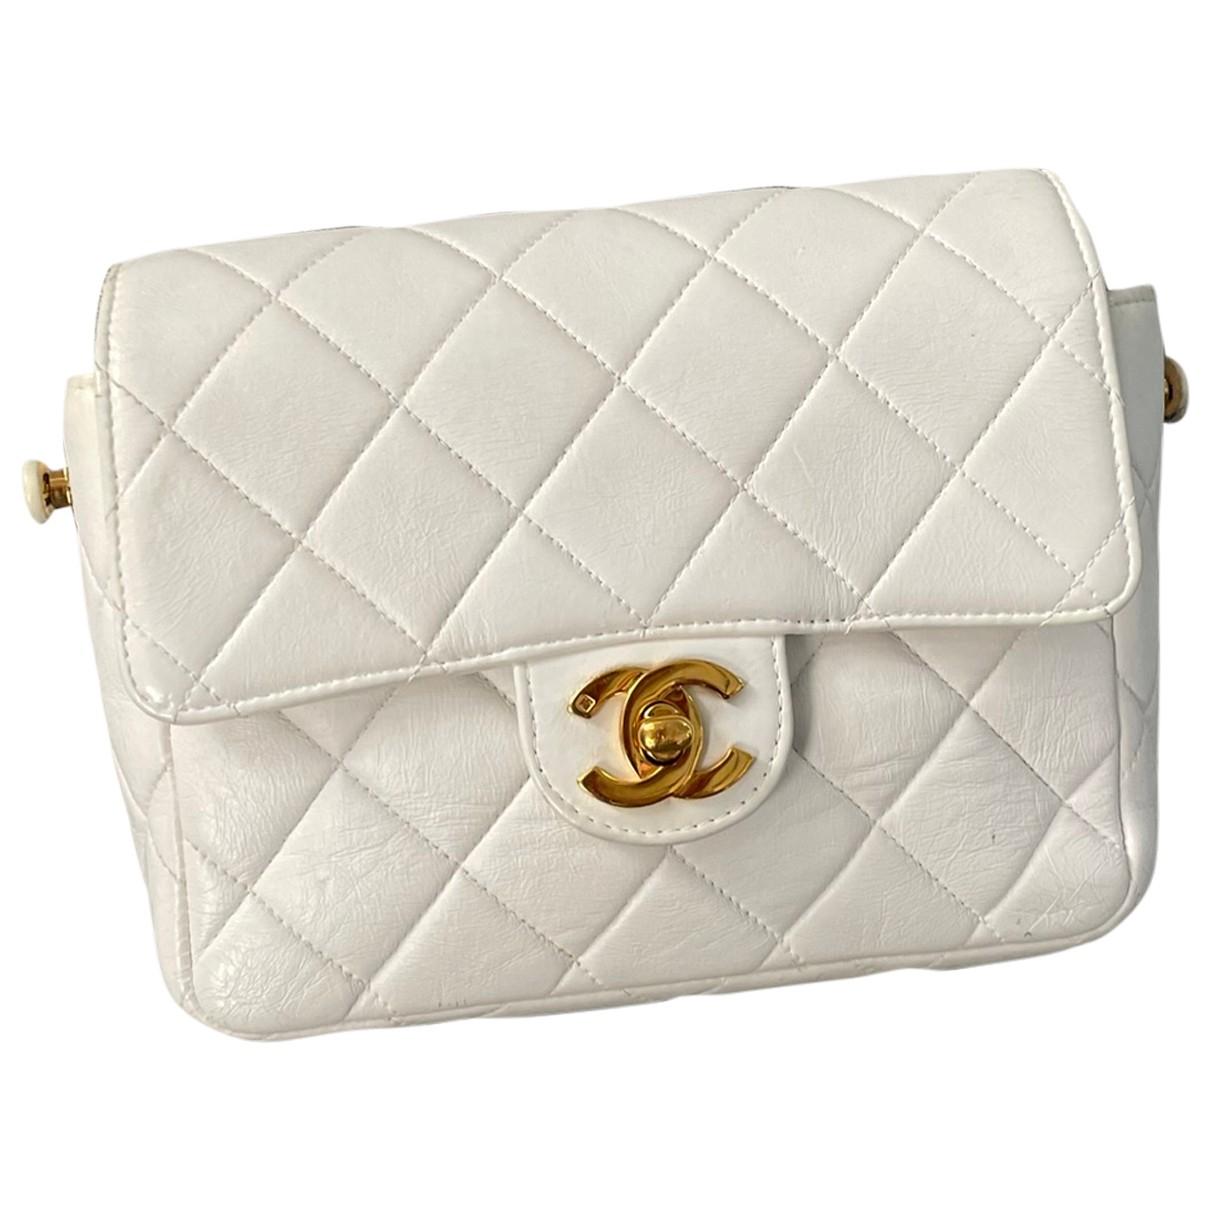 Timeless/Classique Chanel Handbags for Women - Vestiaire Collective